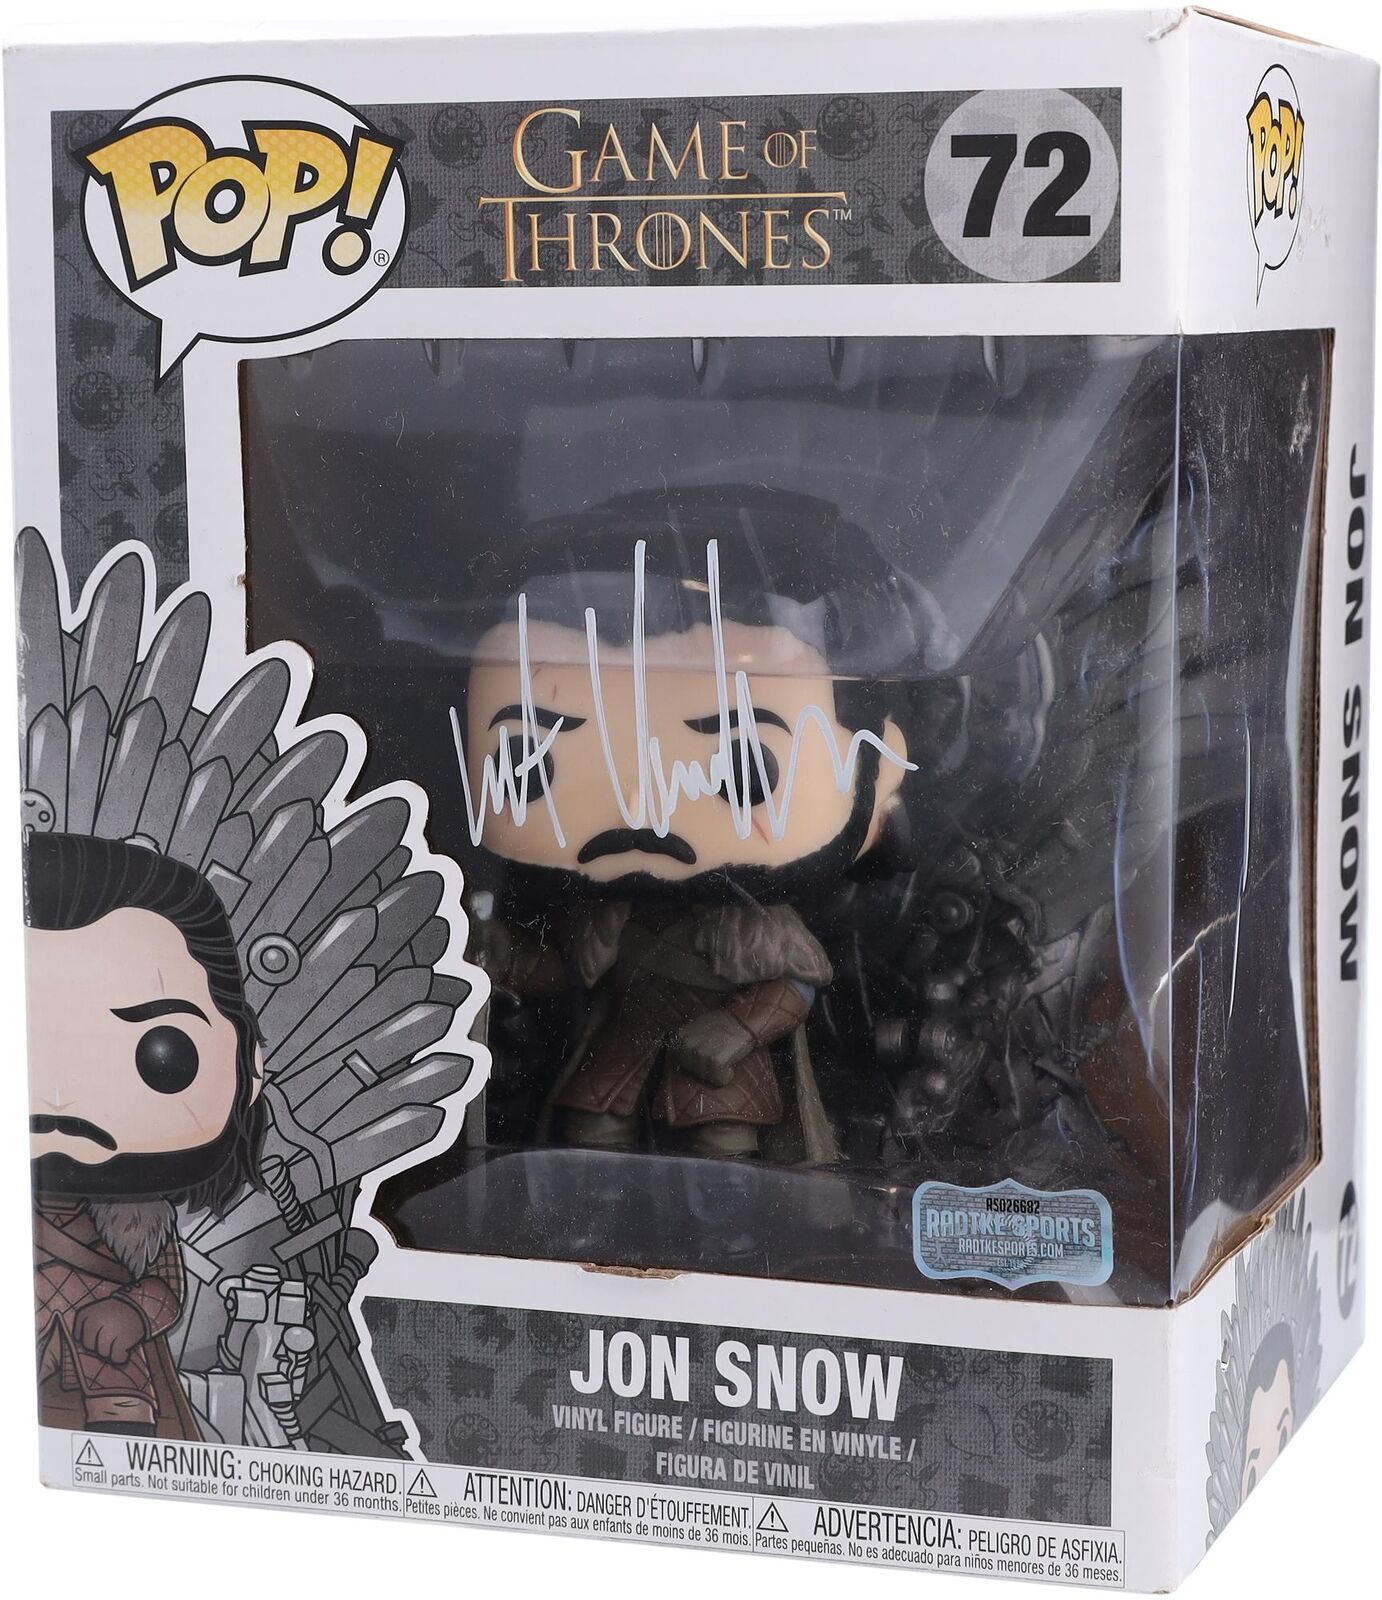 Kit Harington Game of Thrones Autographed #61 Jon Snow Funko Pop - TV Figurines